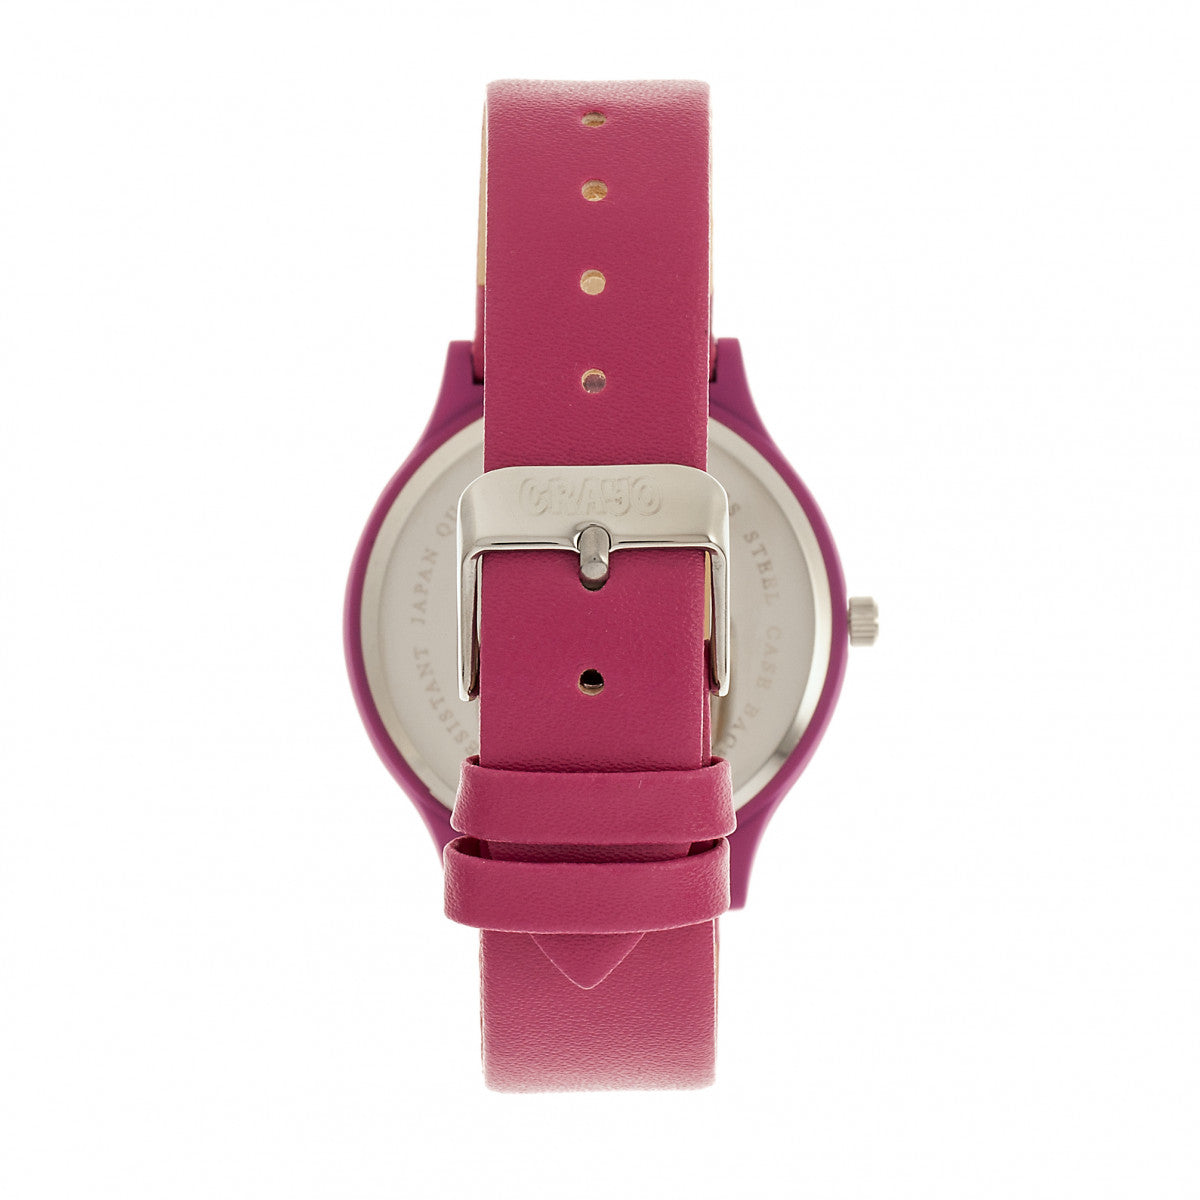 Crayo Trinity Unisex Watch - Hot Pink - CRACR4406